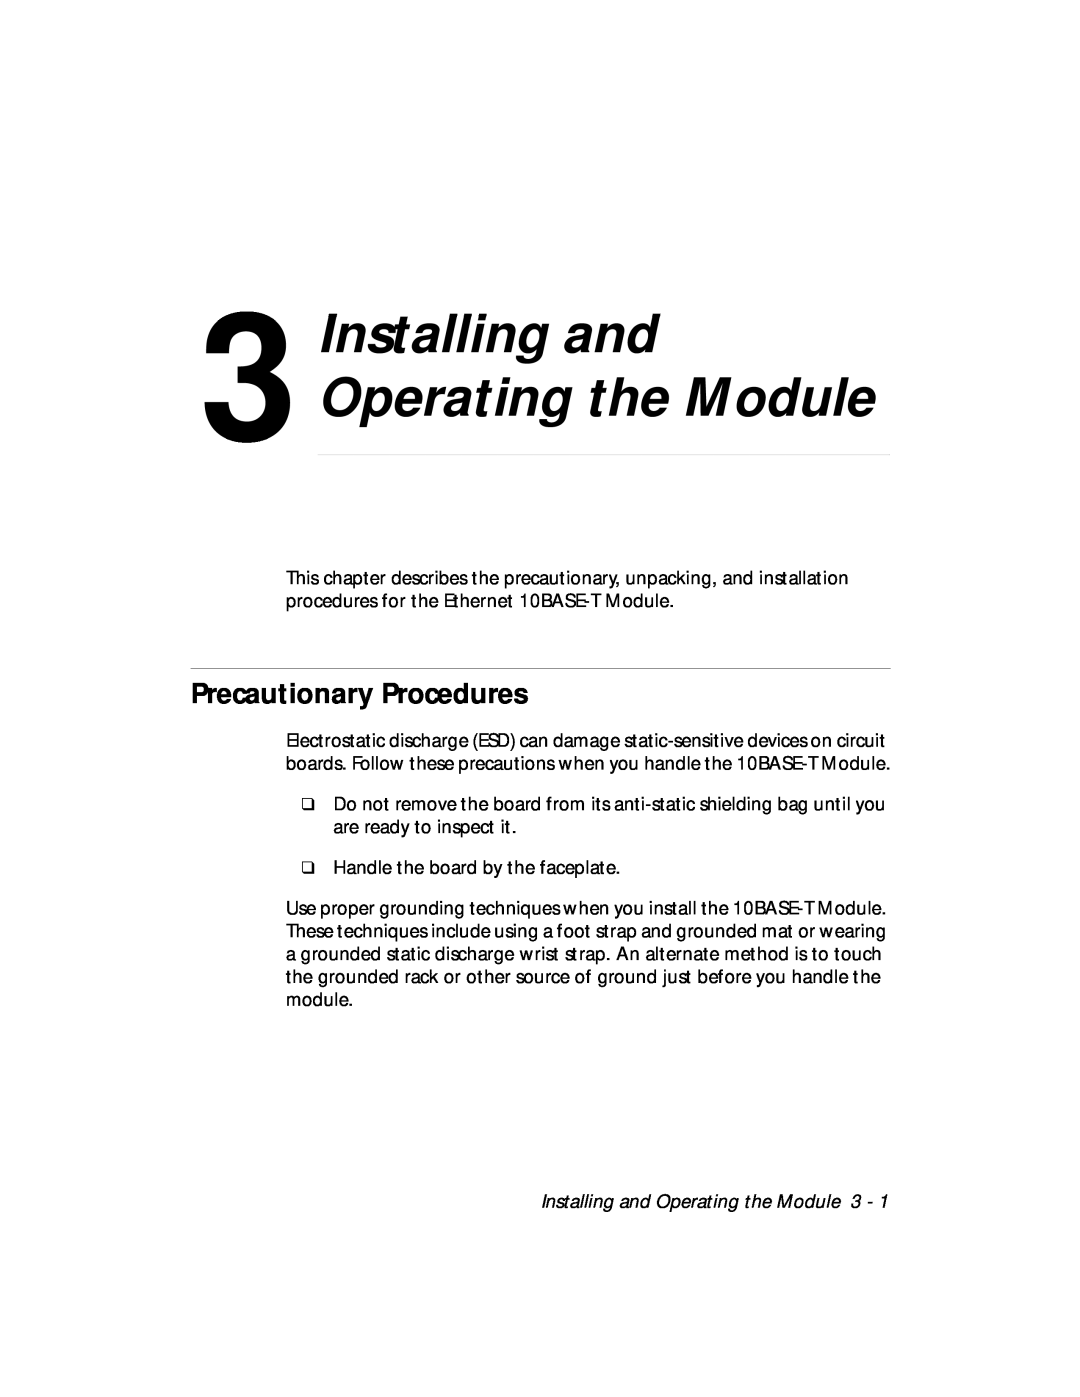 3Com 5108M-TP manual Installing and Operating the Module, Precautionary Procedures 